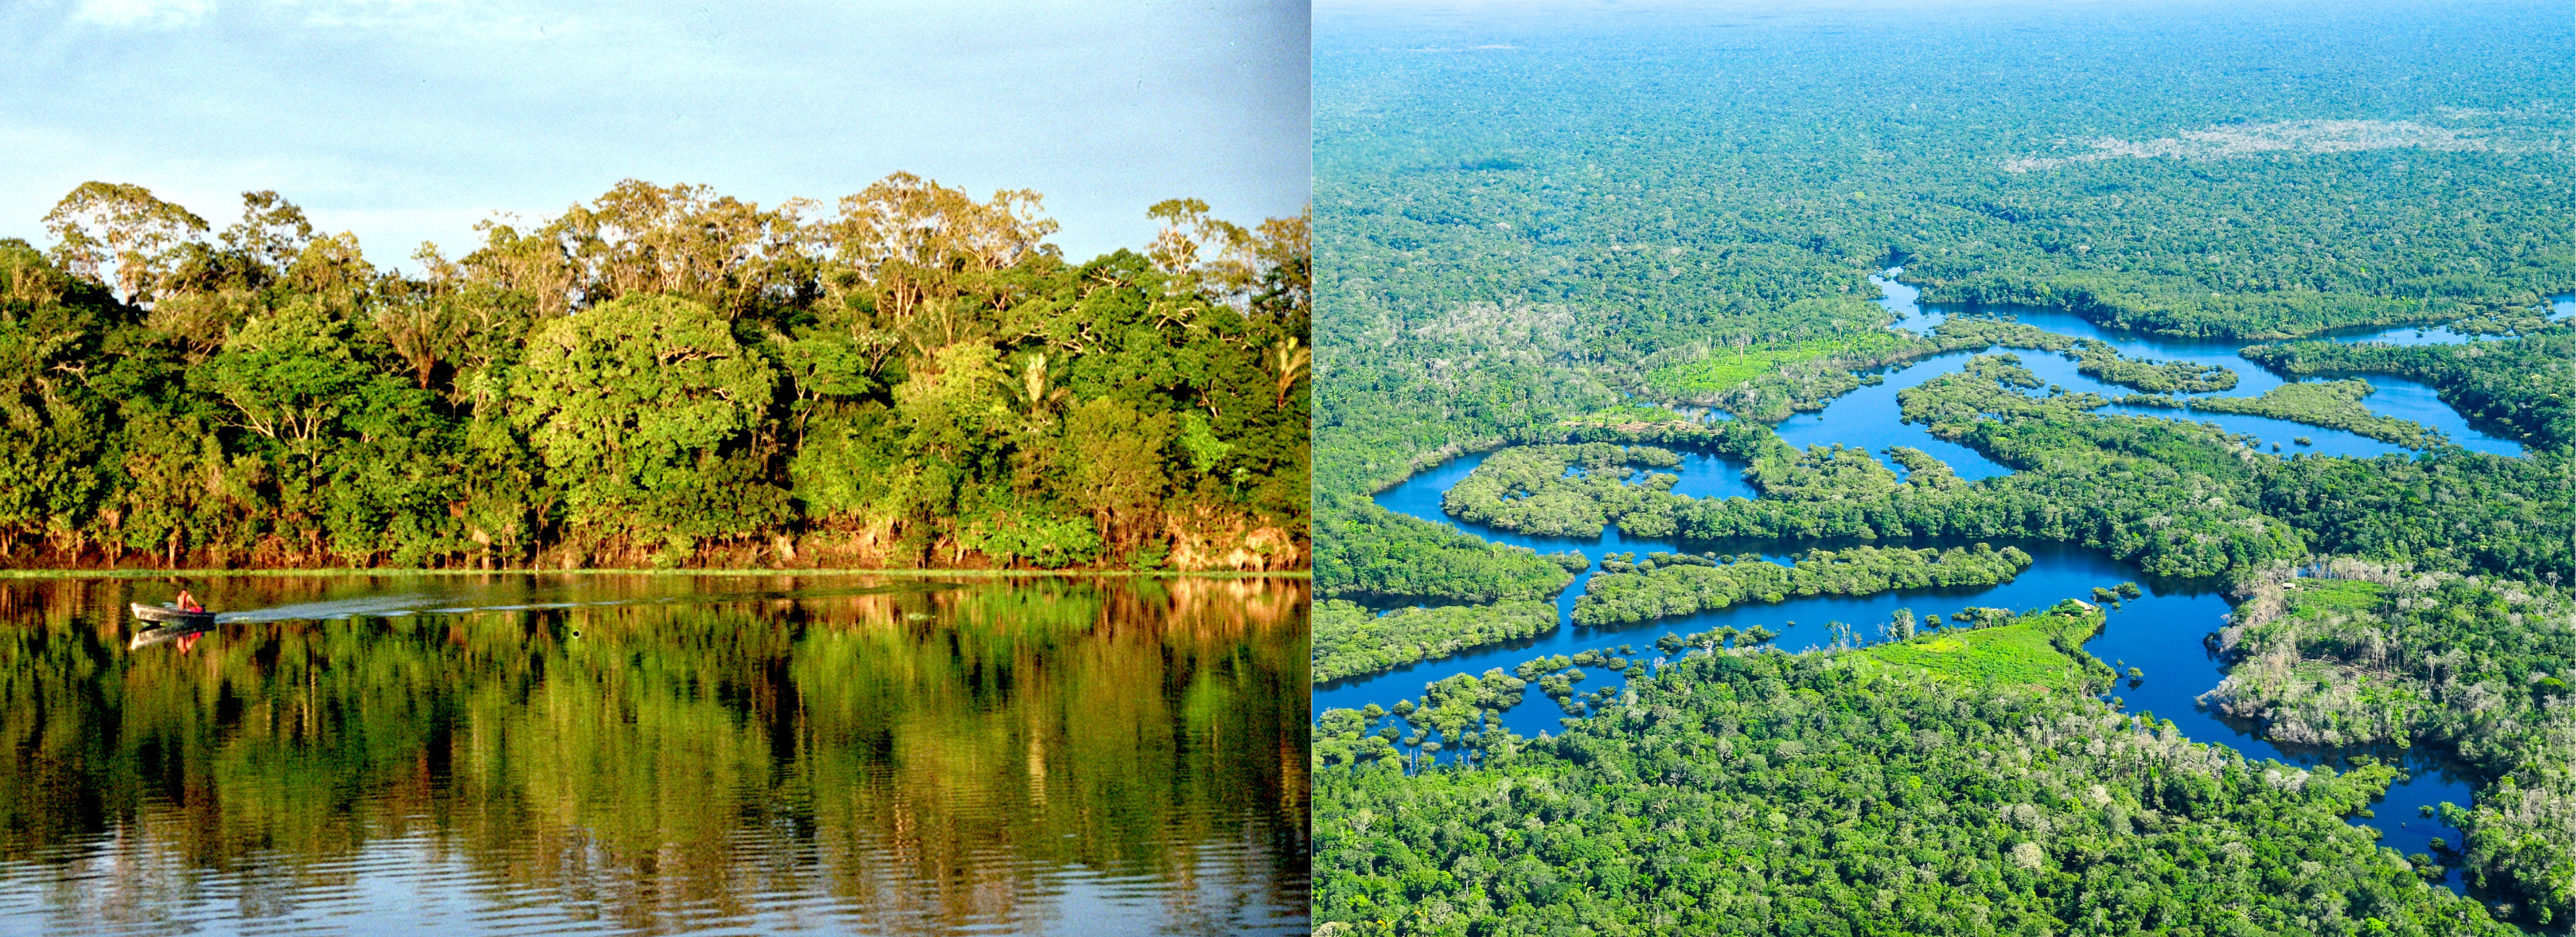 Tropical vegetation reflecting on the Amazon River; lush green vegetation among a wet river environment 